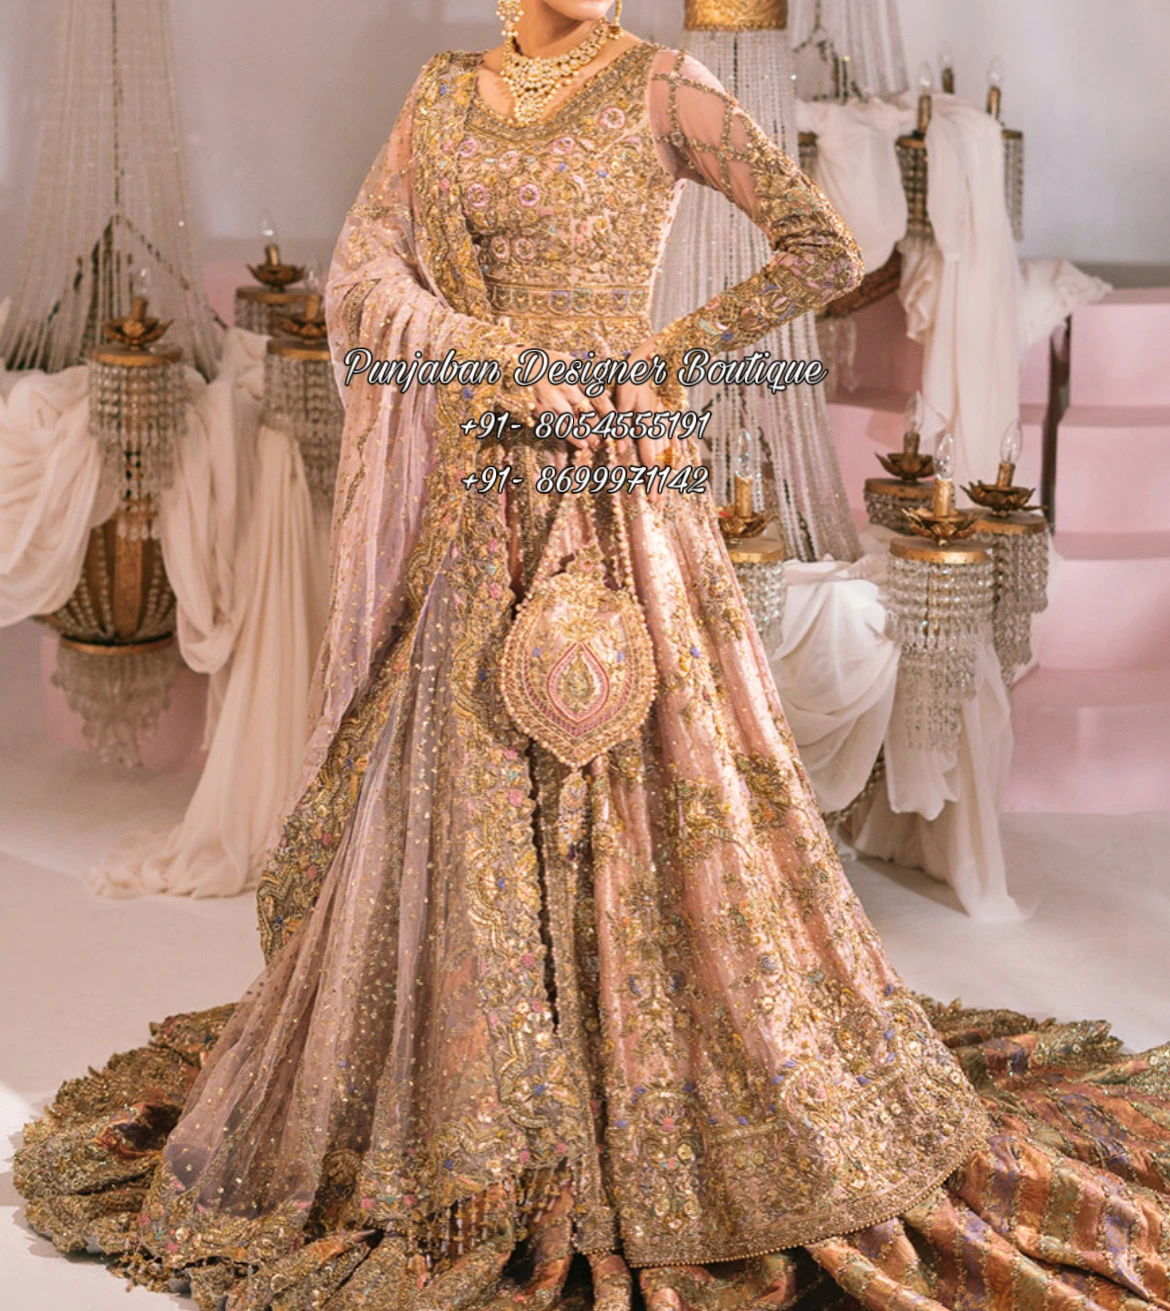 Top 50 Bridal Wear Stores In Mumbai For Wedding Shopping